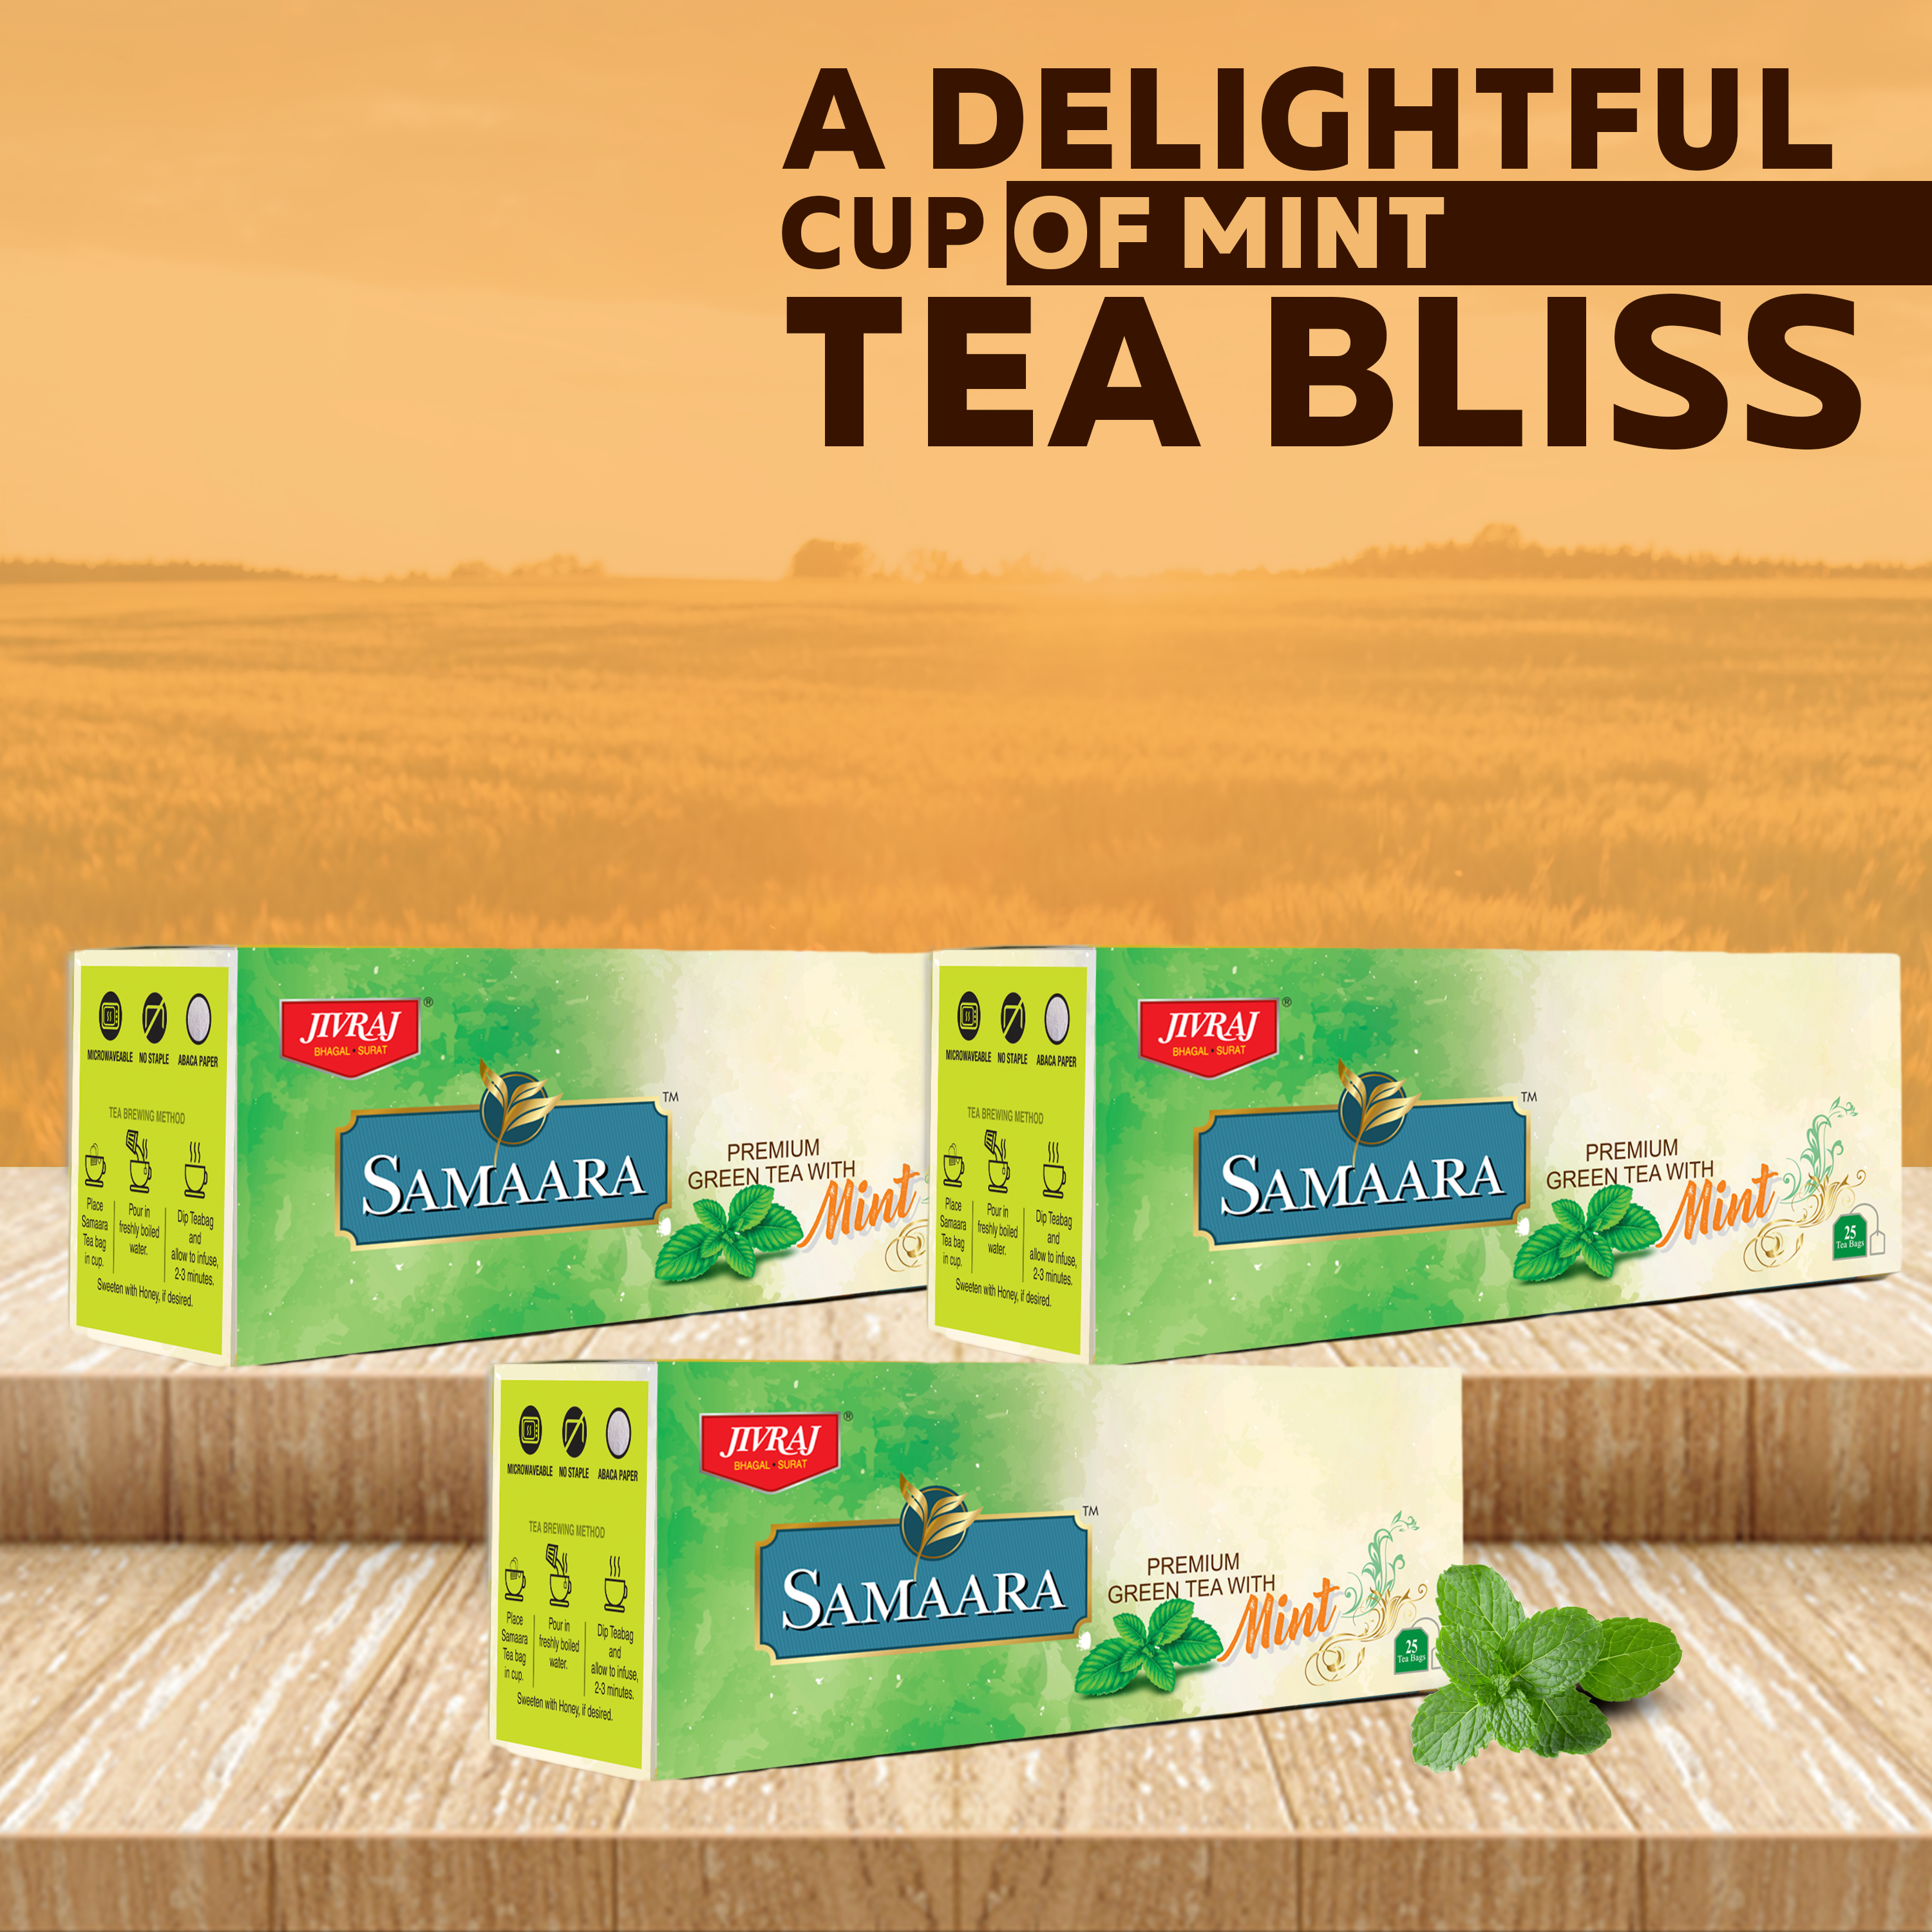 JIVVIJ SAMAARA Natural Mint Flavour Premium Green Tea Bags Box | Refreshing Rich Test of Assam Tea | Helps in Metabolism Pack of 3-25 Tea Bags Each